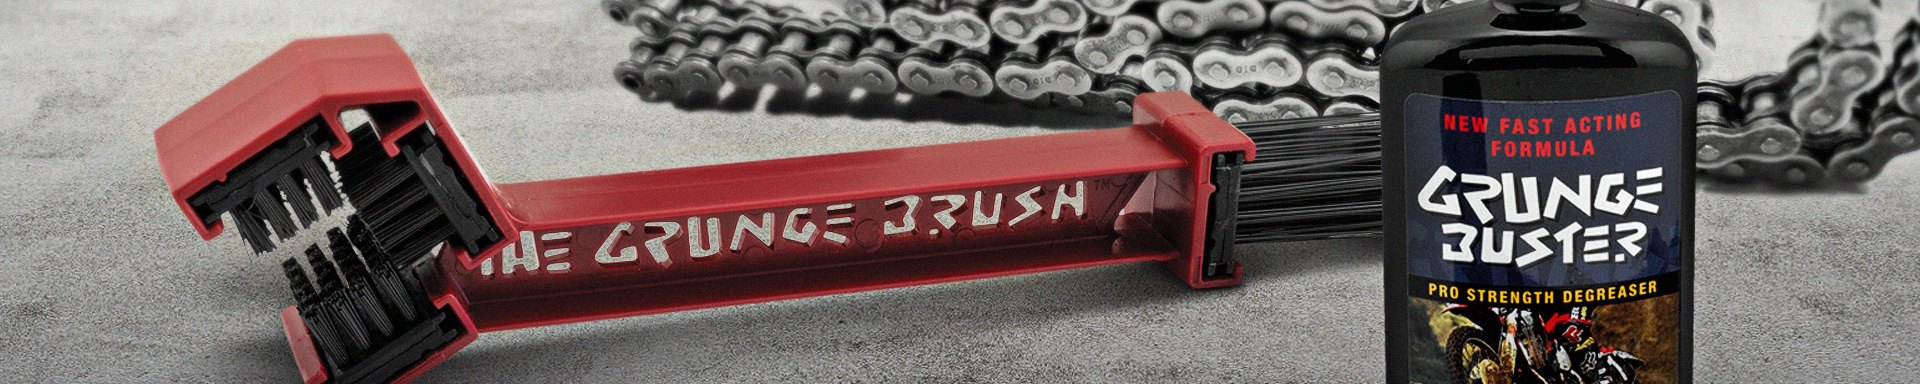 Grunge Brush